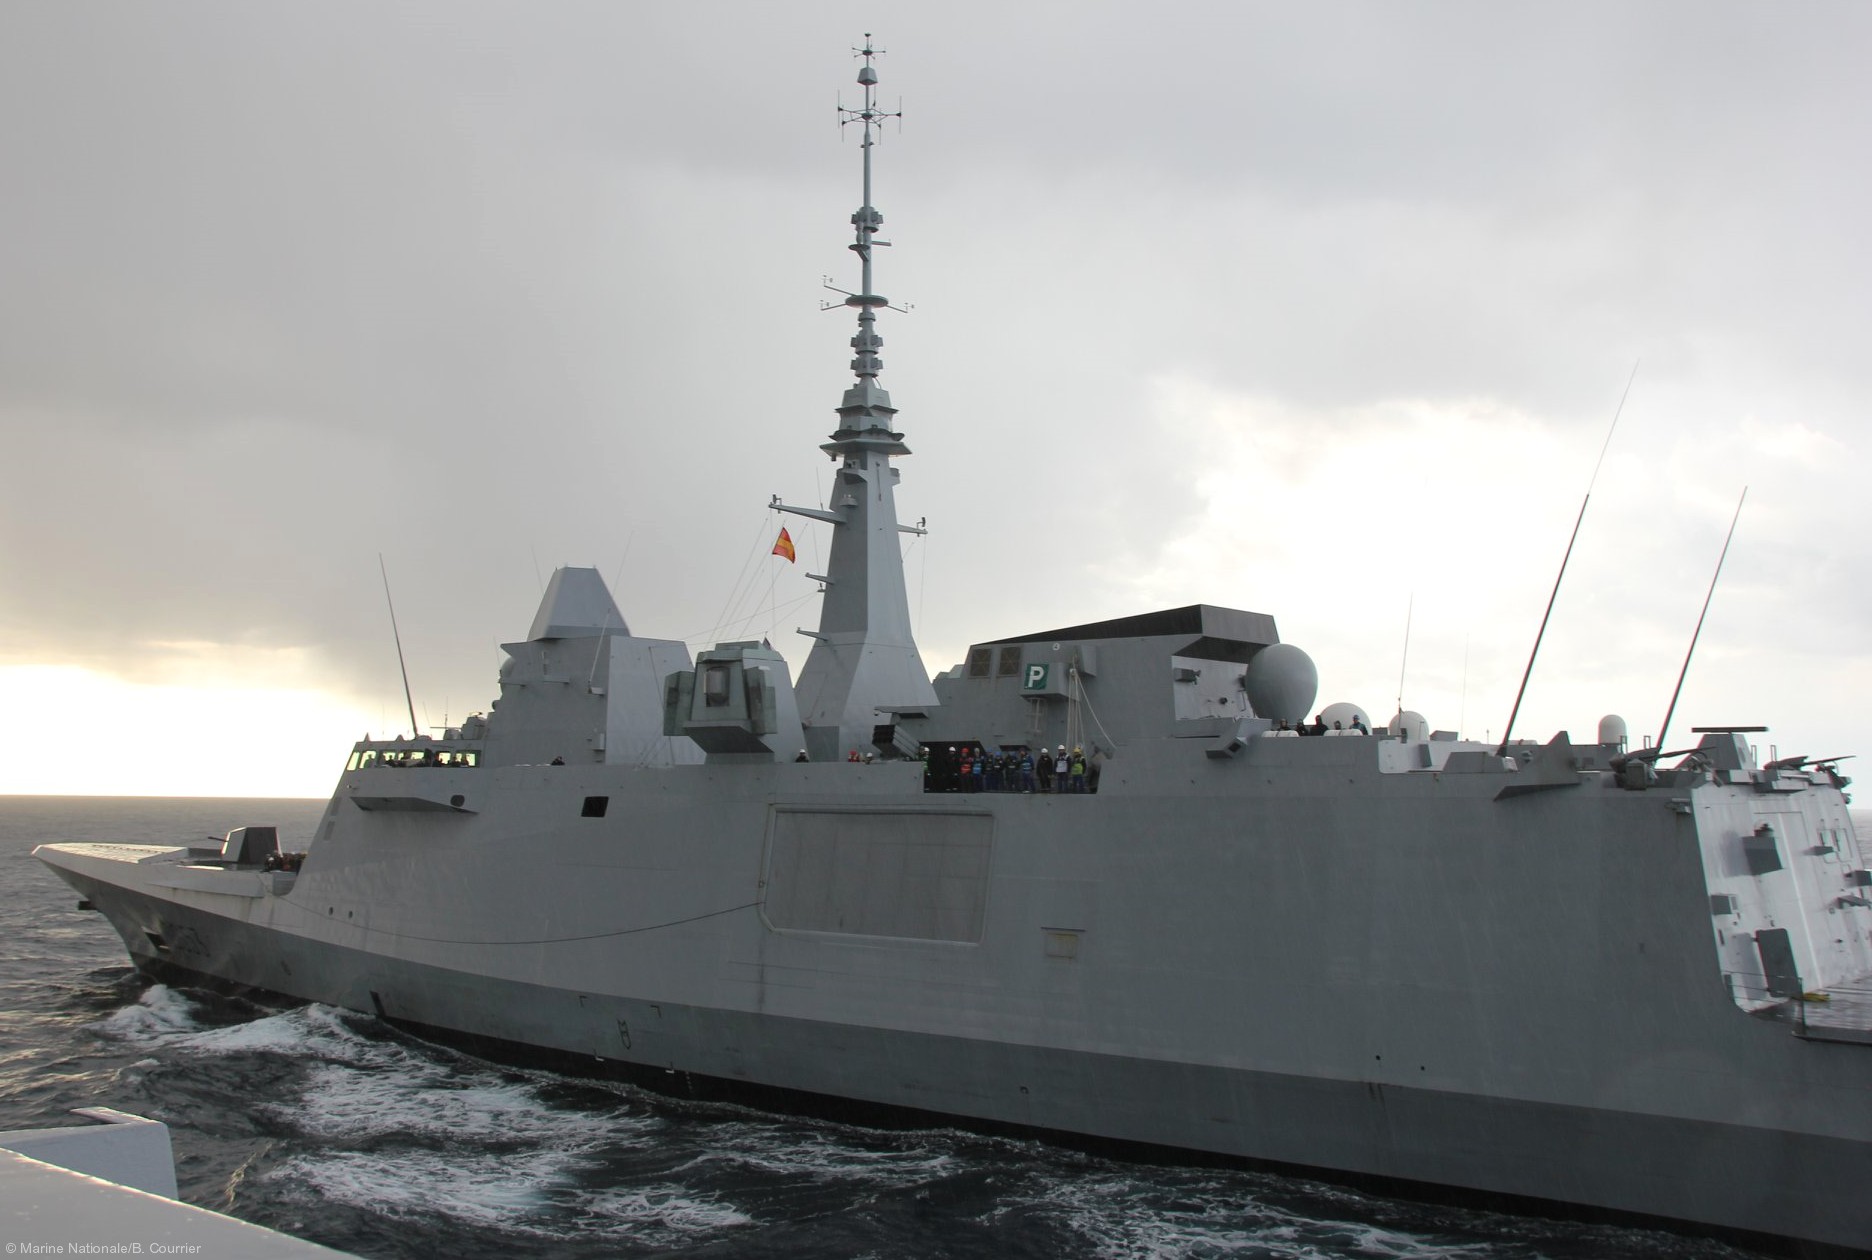 d-653 fs languedoc fremm aquitaine class frigate fregate multi purpose french navy marine nationale 06